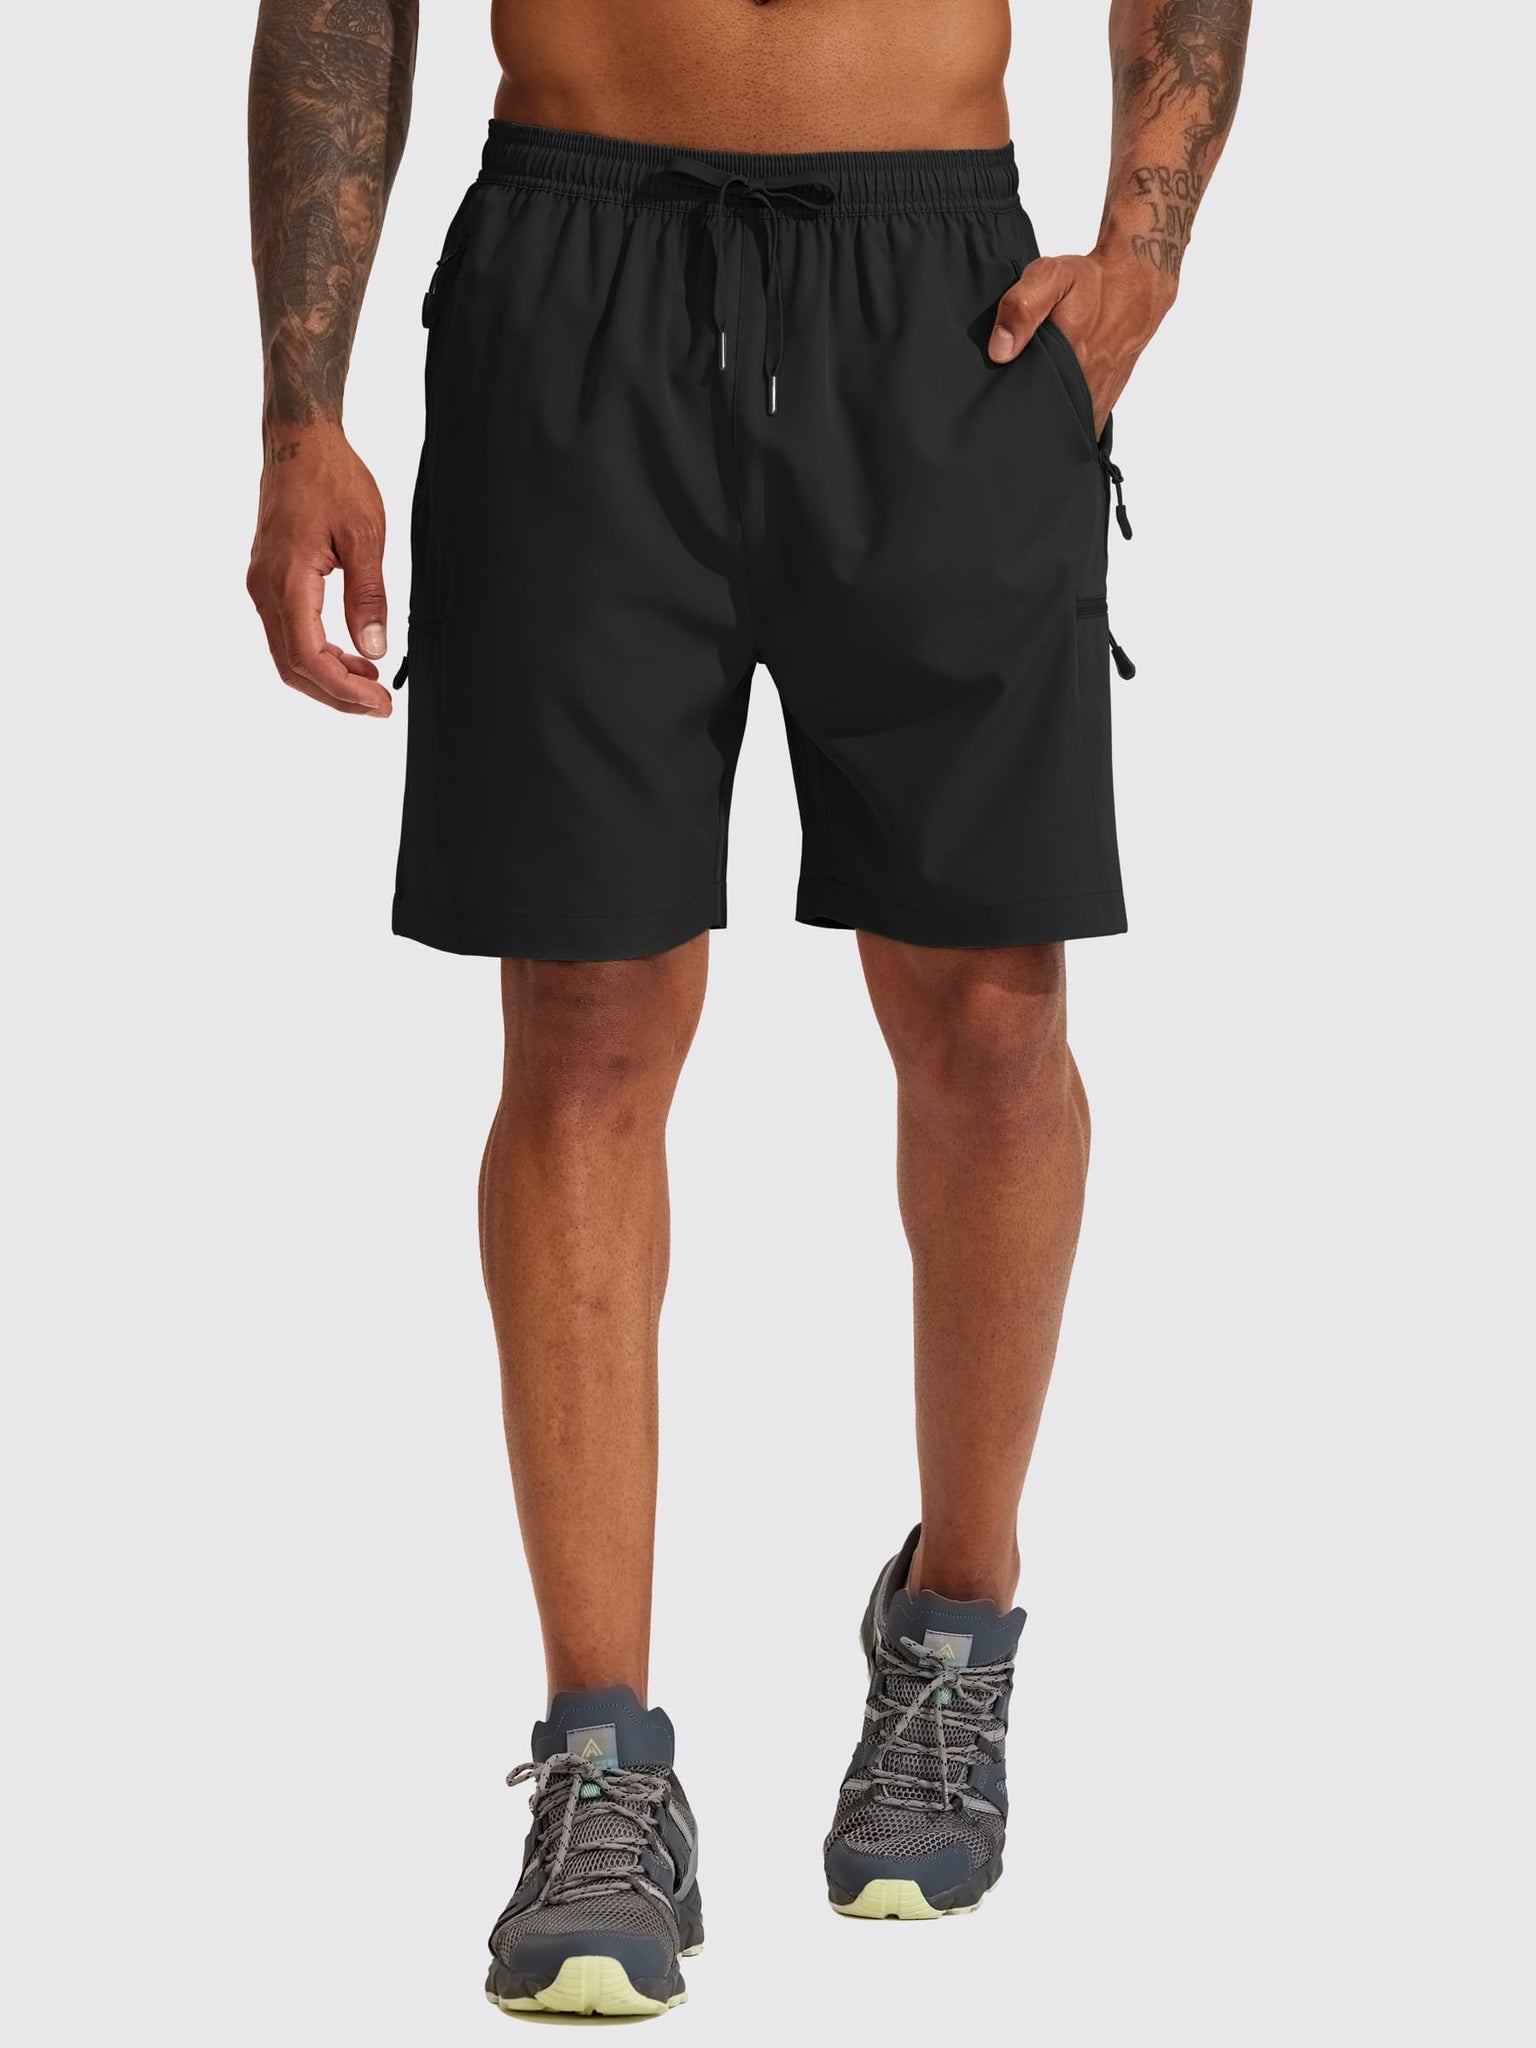 Men's Lightweight Cargo Shorts 7 Inch_Black1